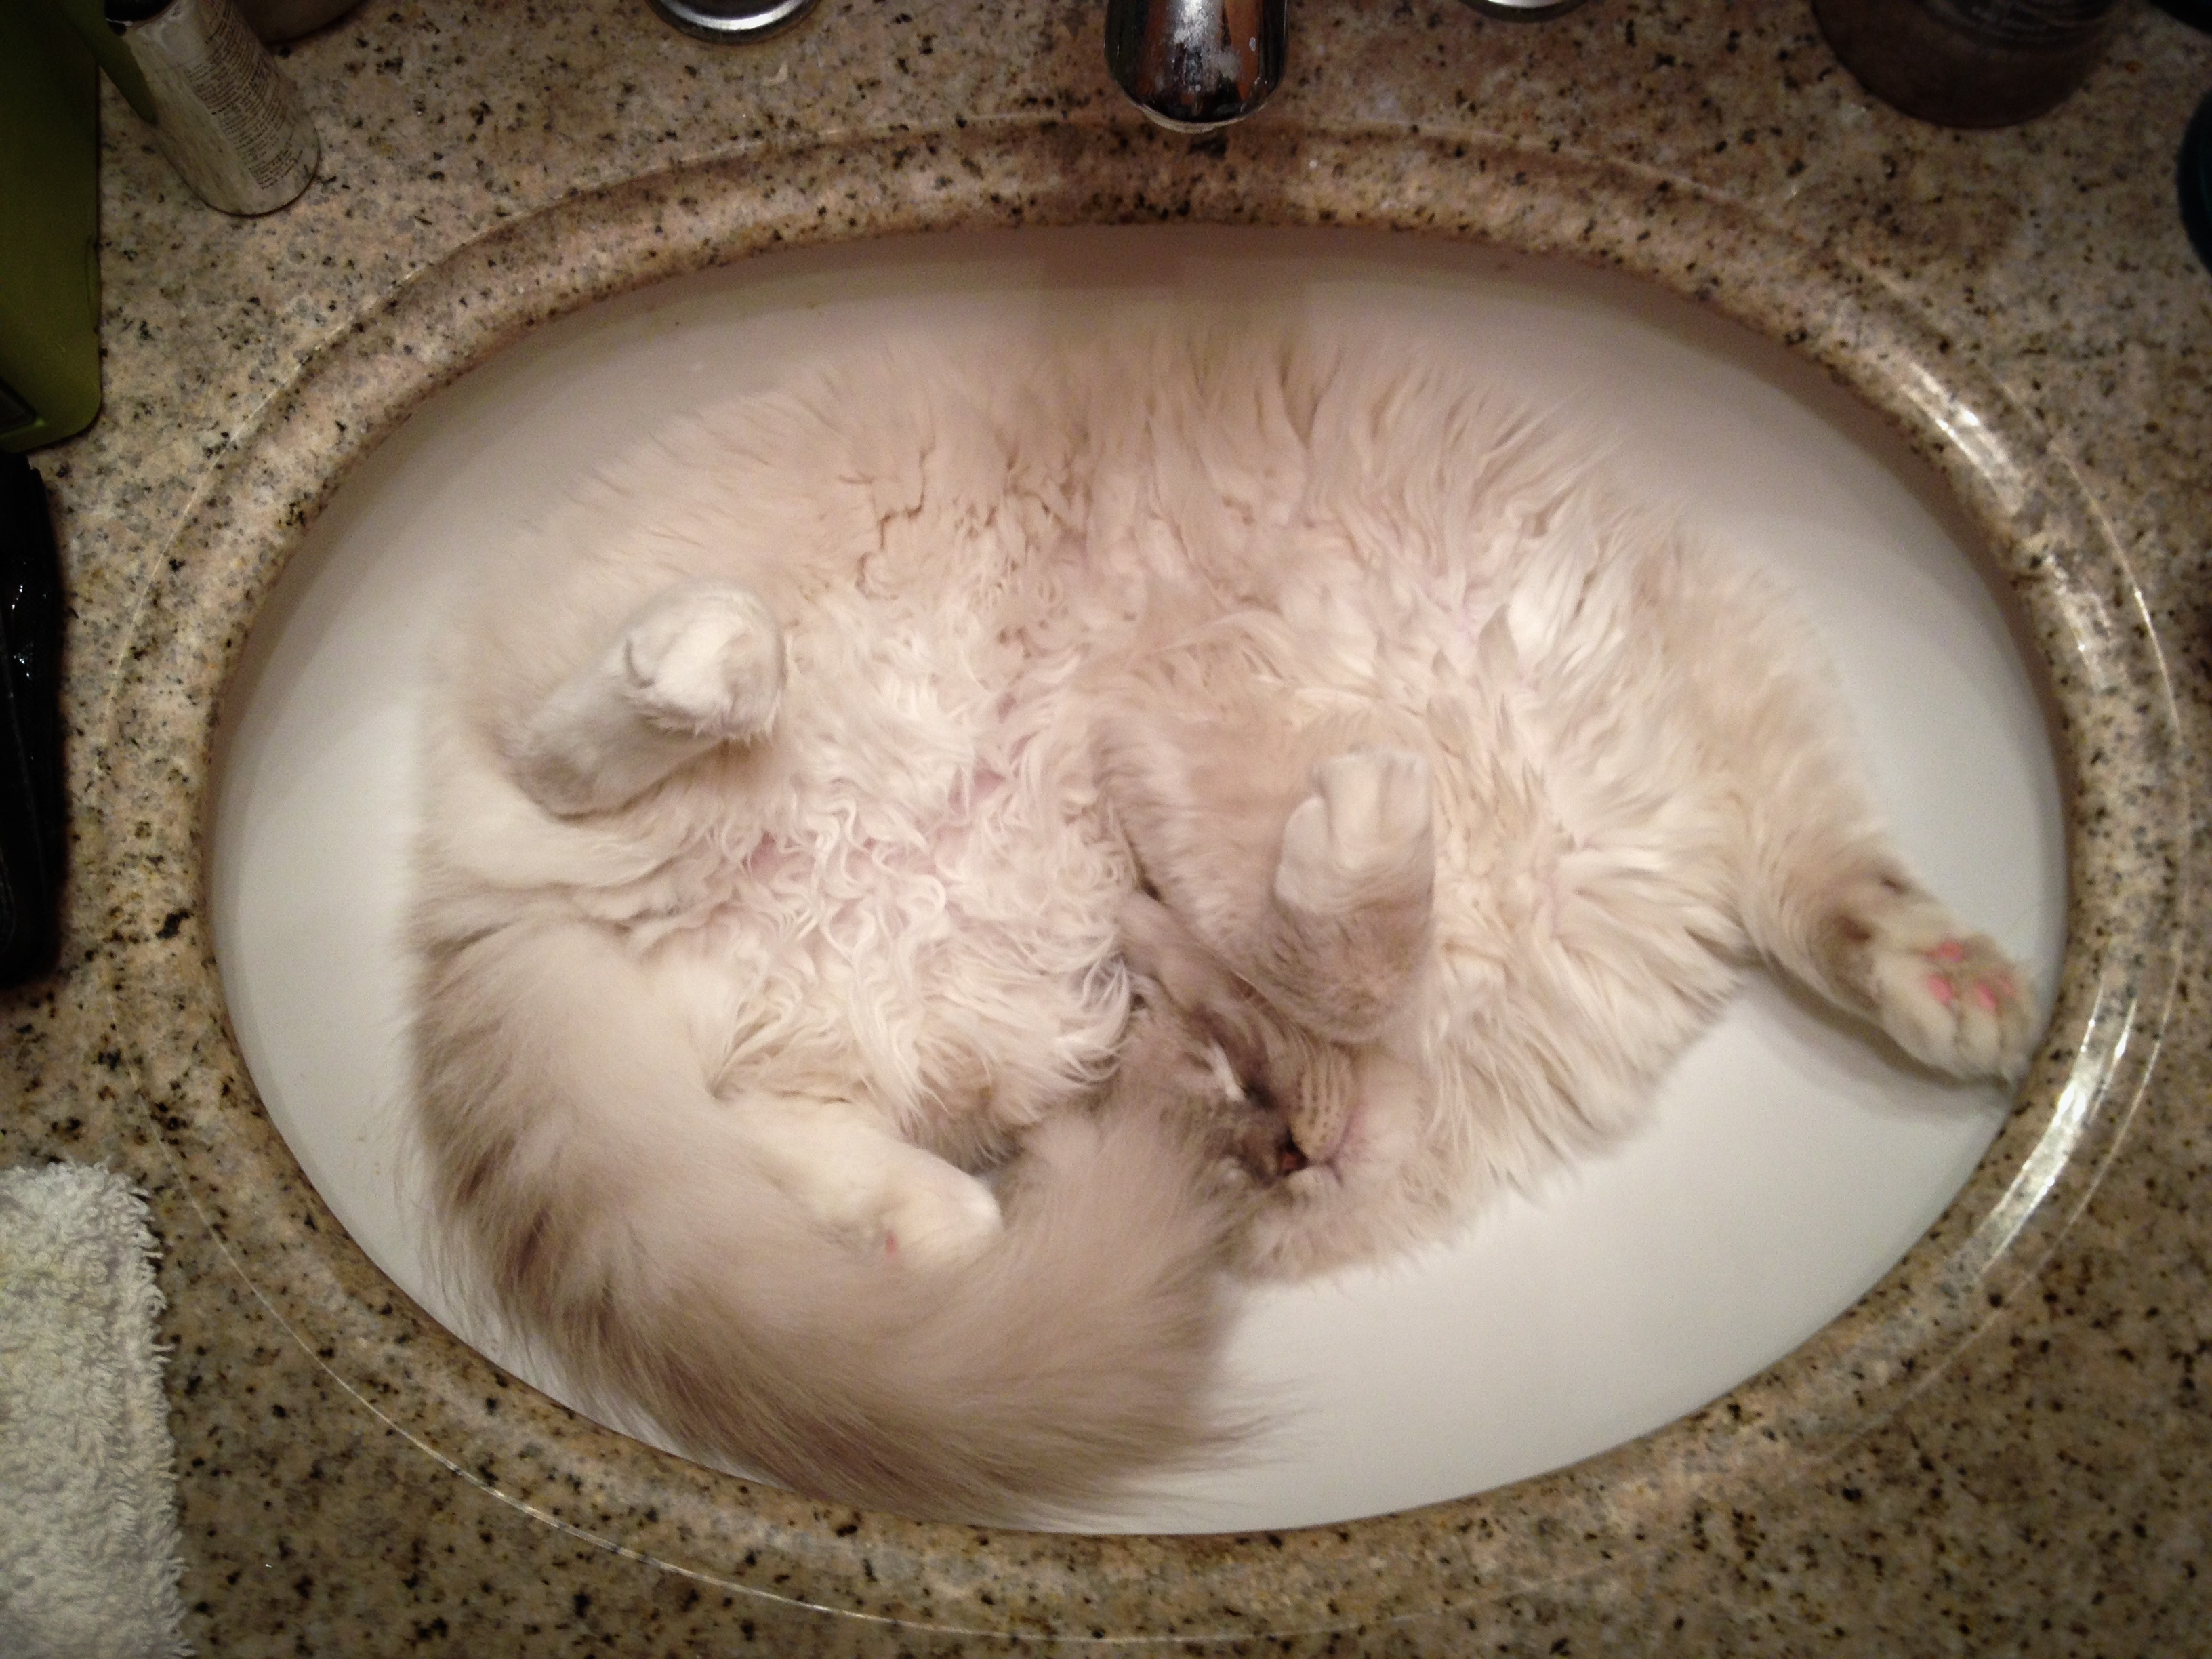 Beezle sleeping in the sink